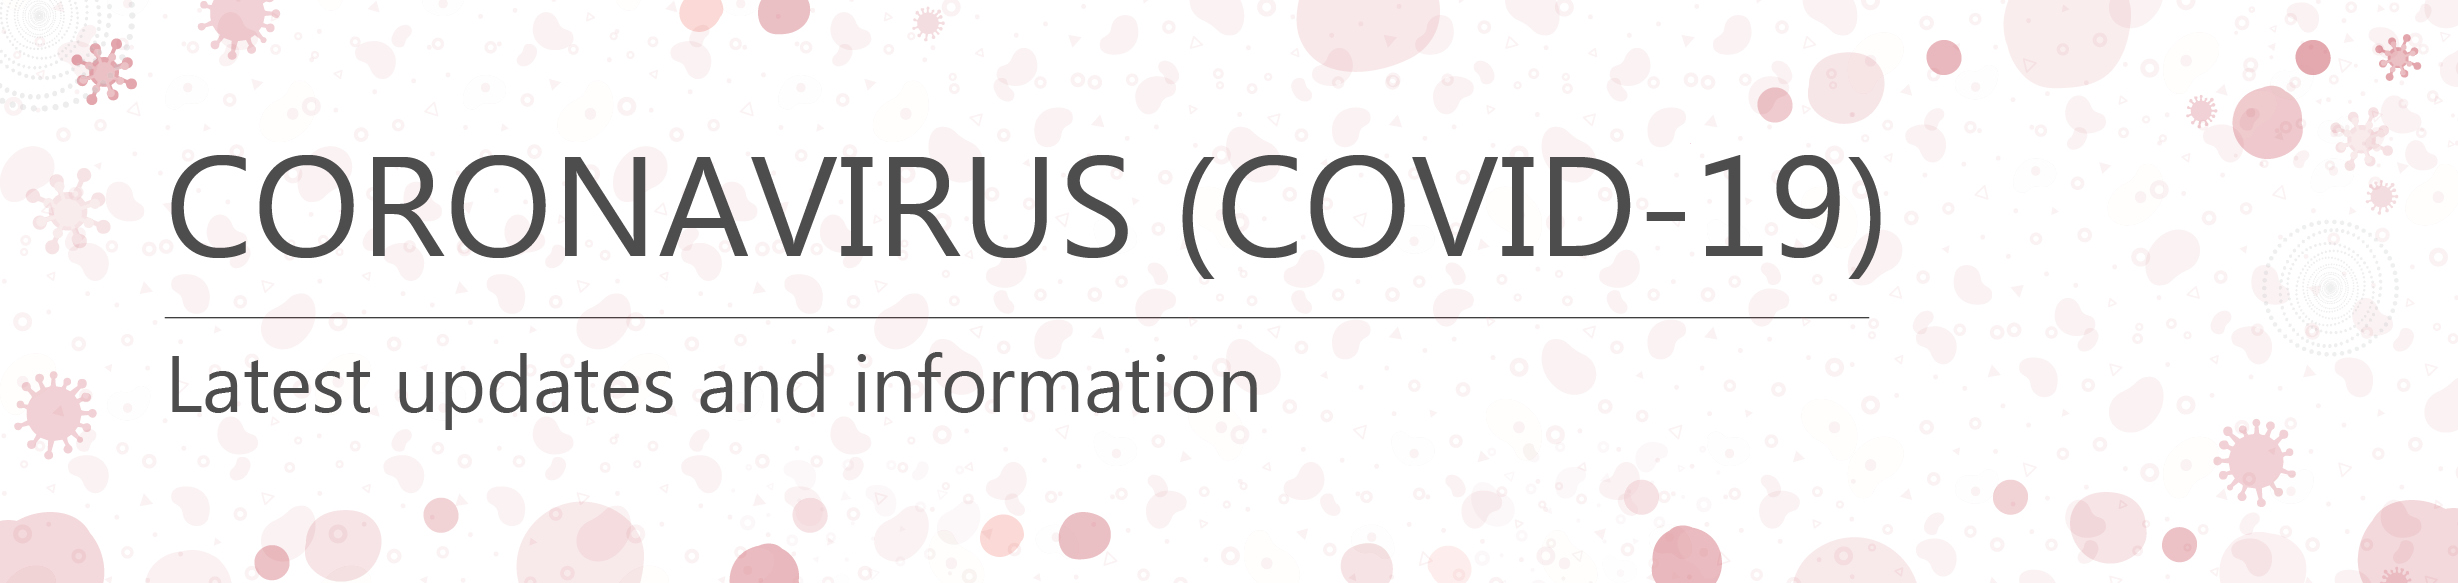 Coronavirus [COVID-19] all you need to know